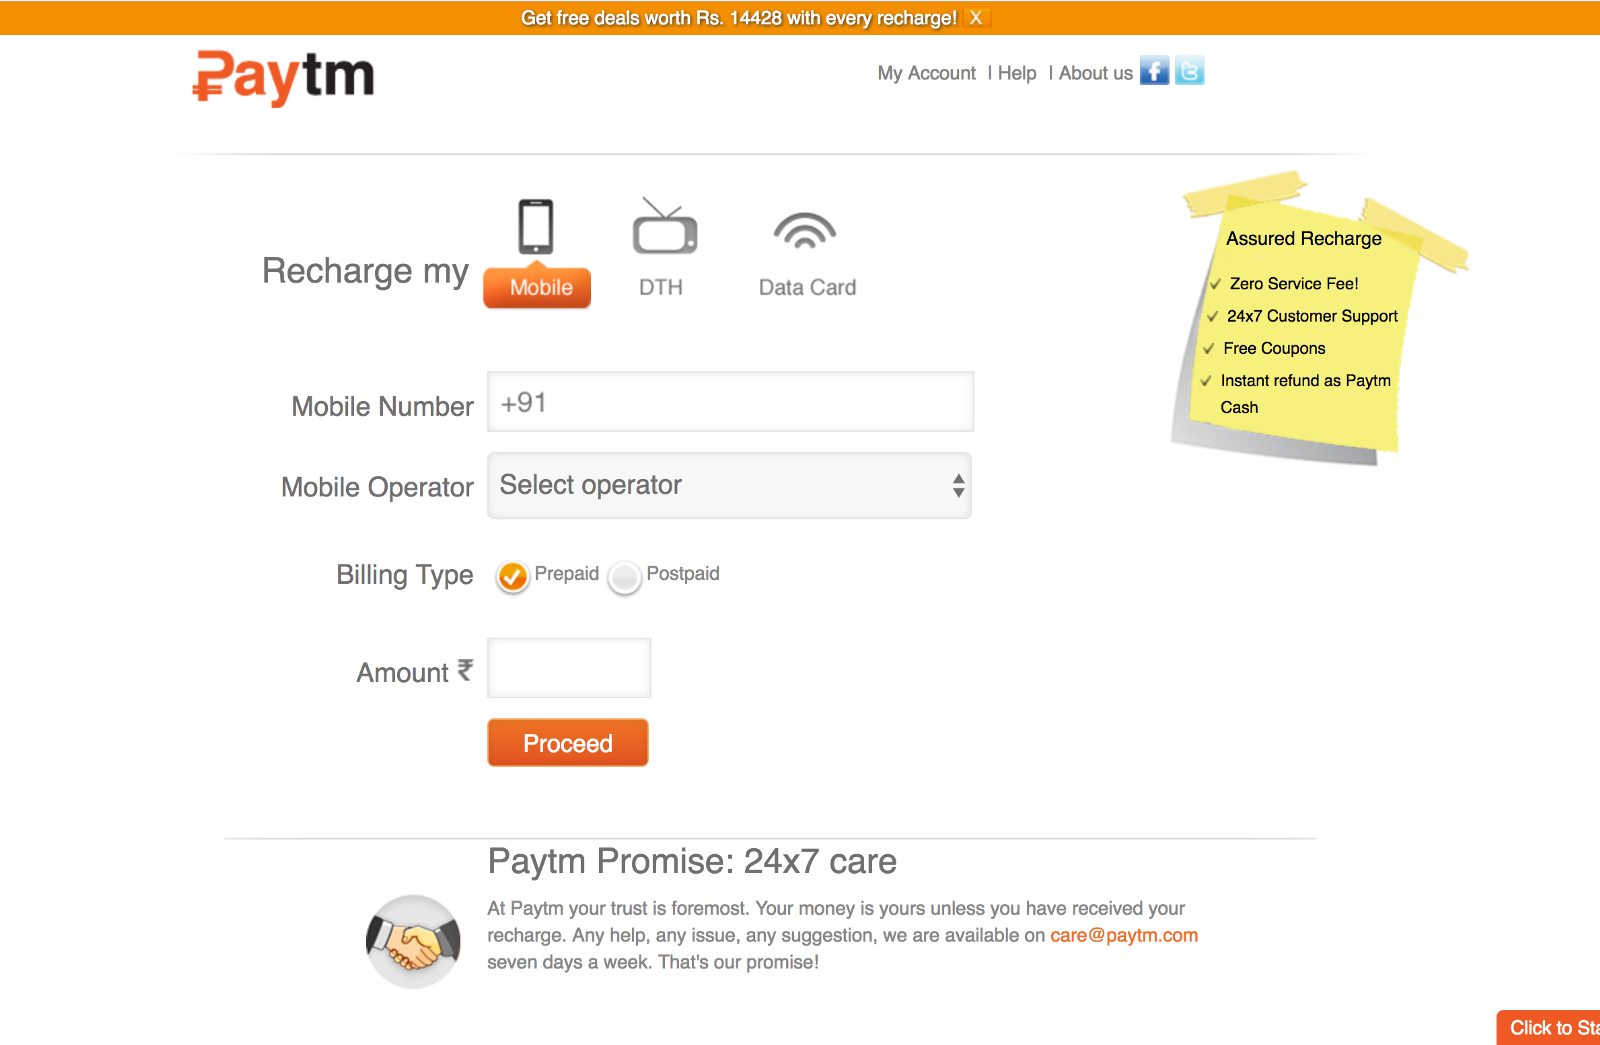 Paytm Homepage, Early 2012